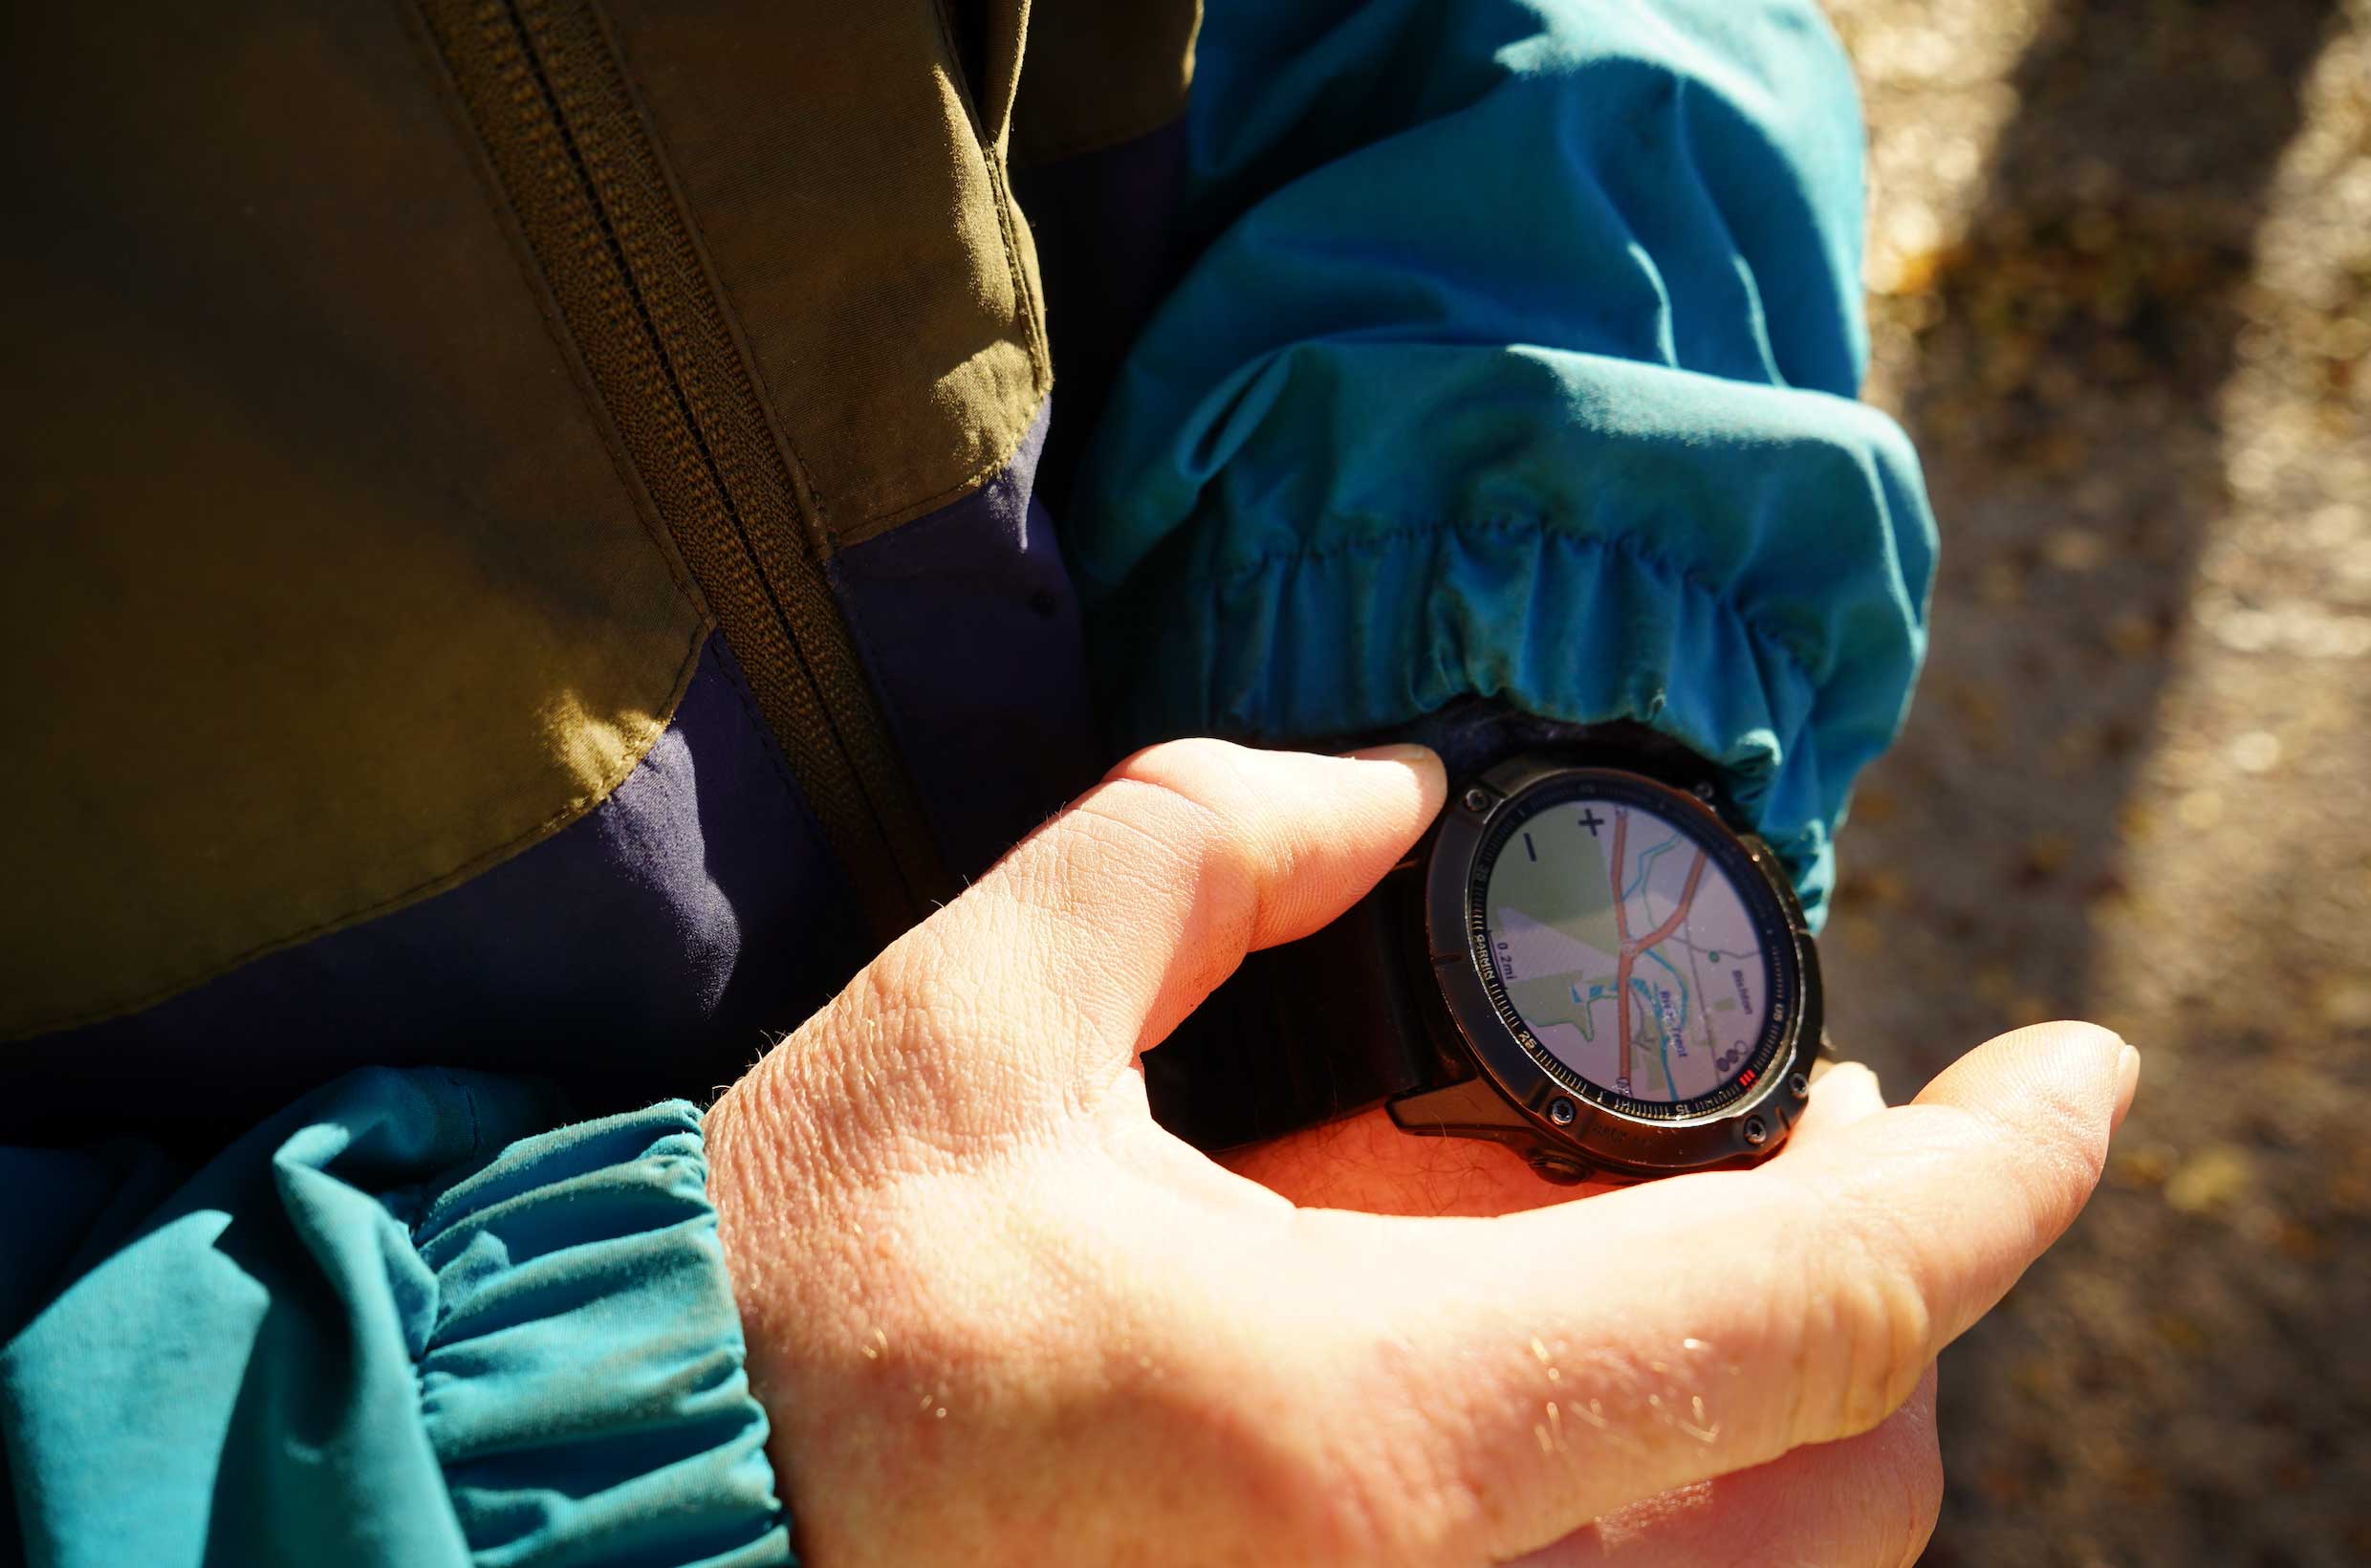 Using a Garmin watch to track GPS data